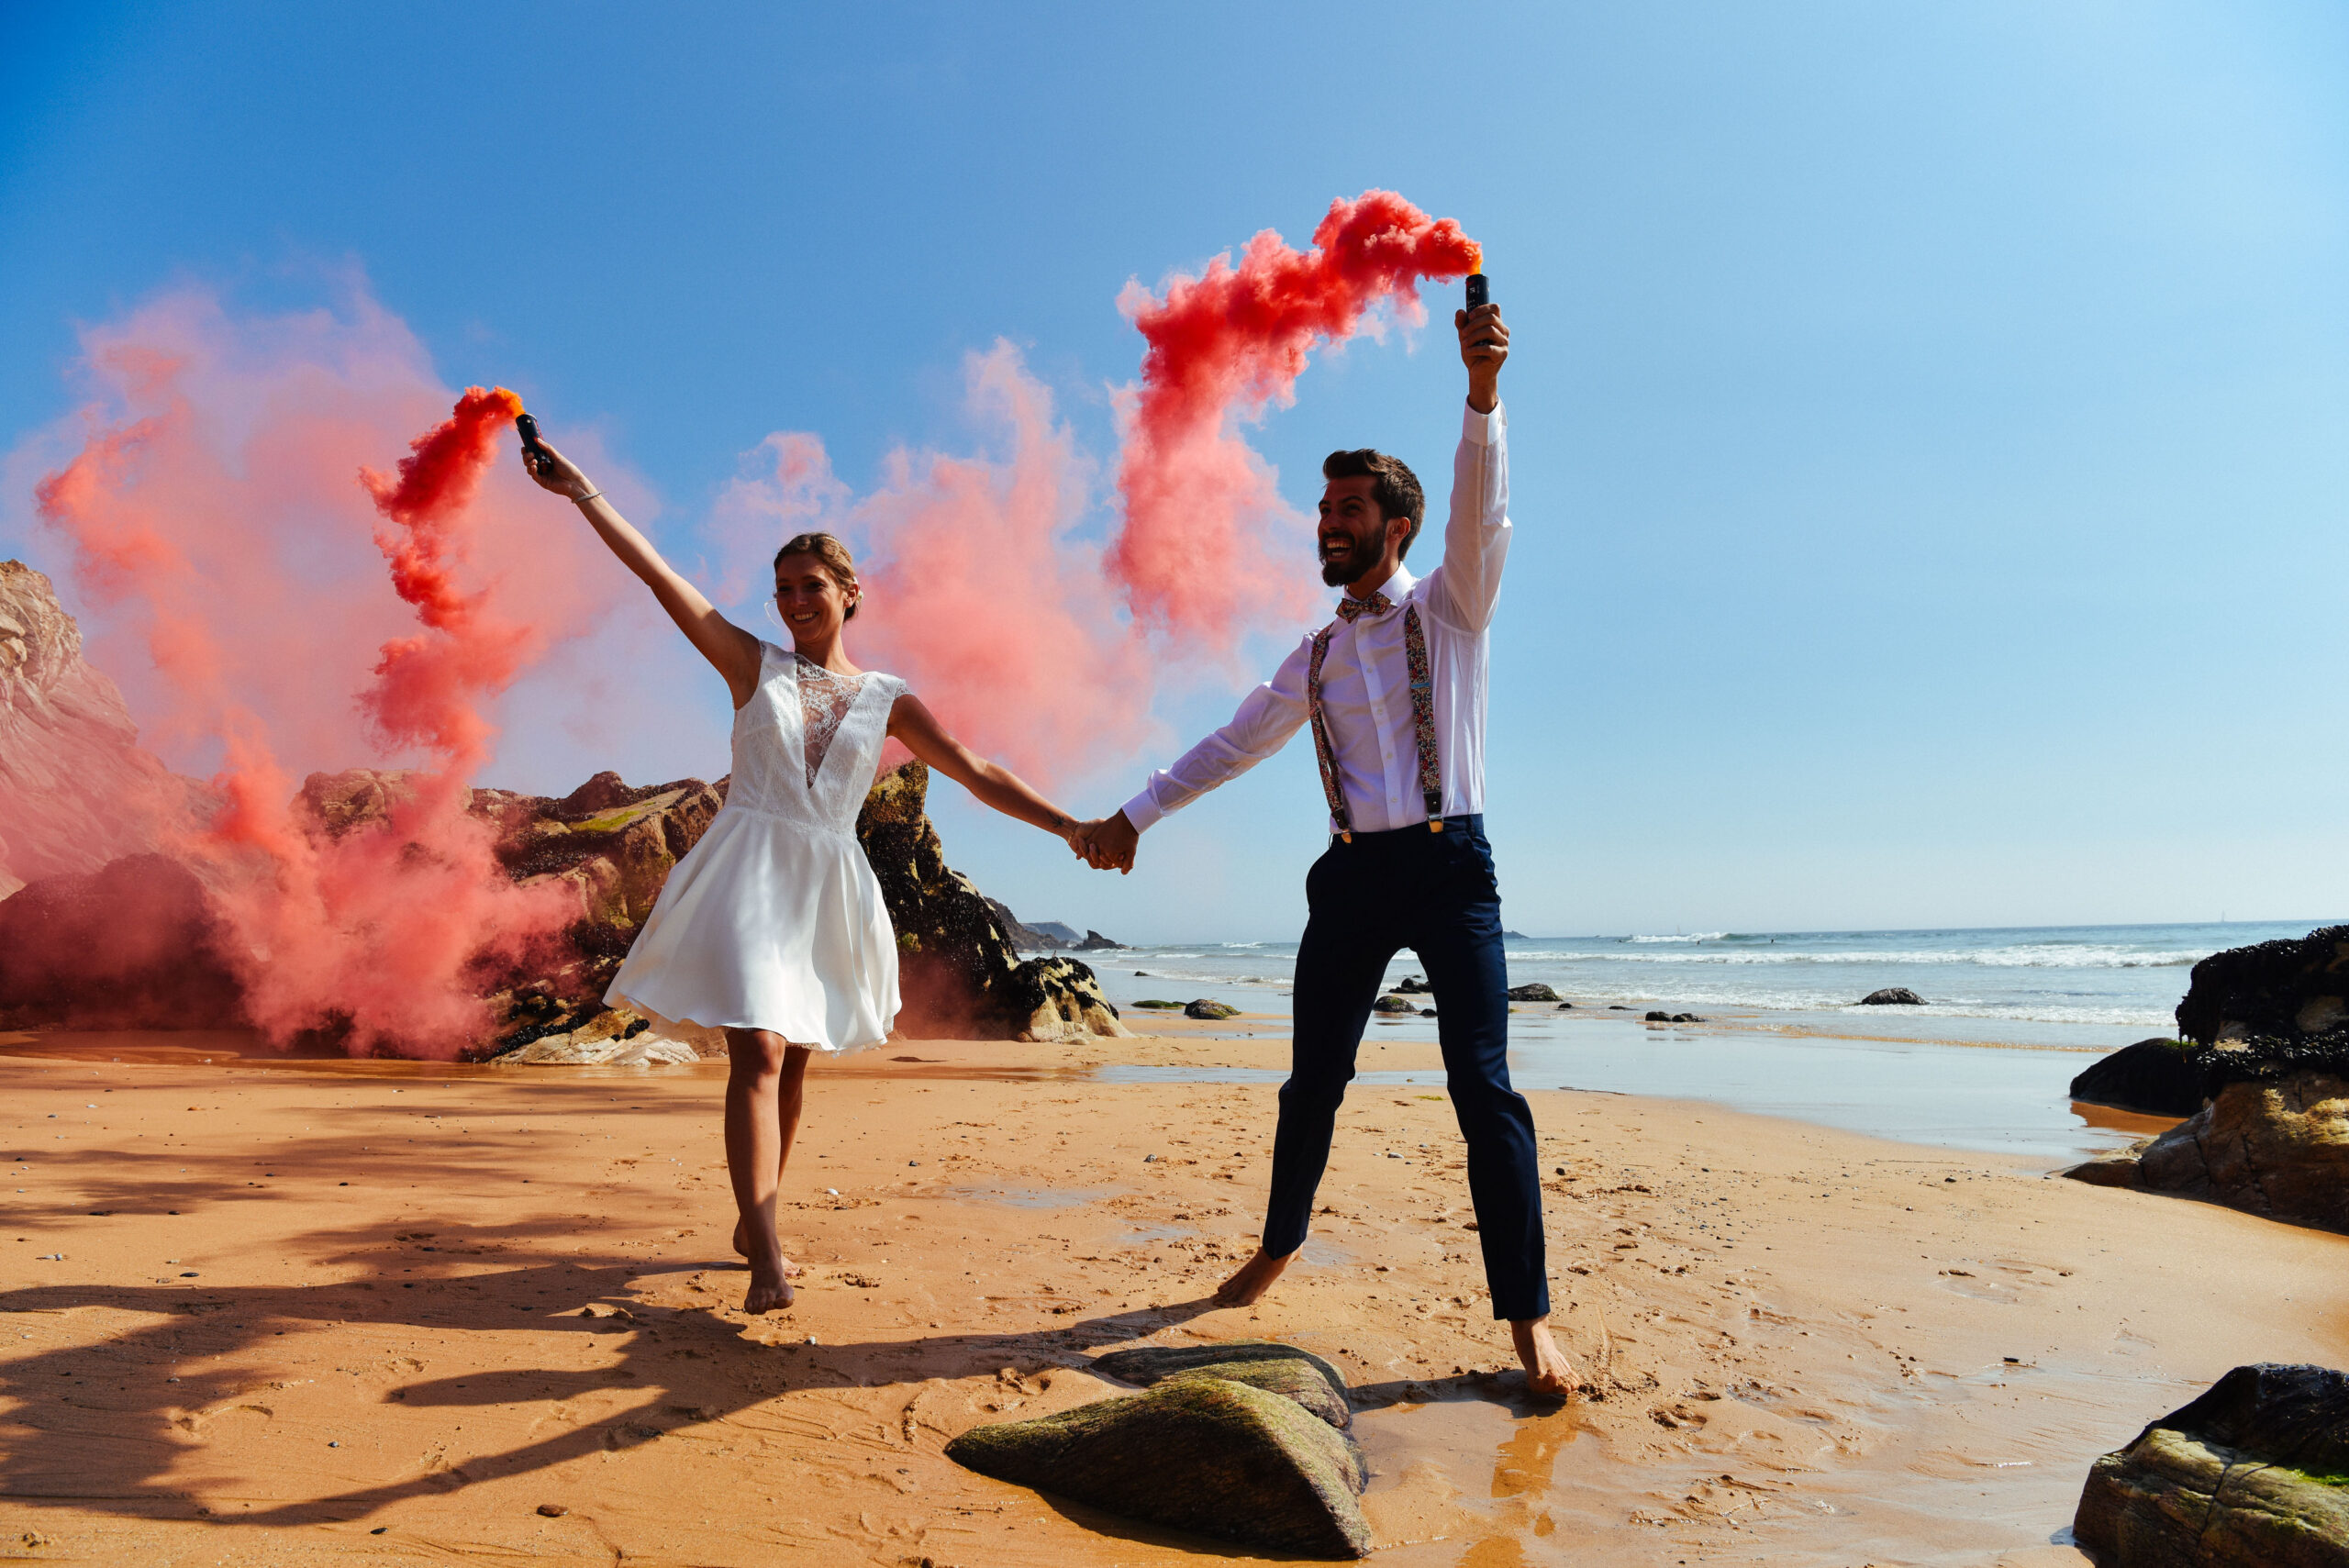 dday wedding planner organisation mariage france mariés bord de mer